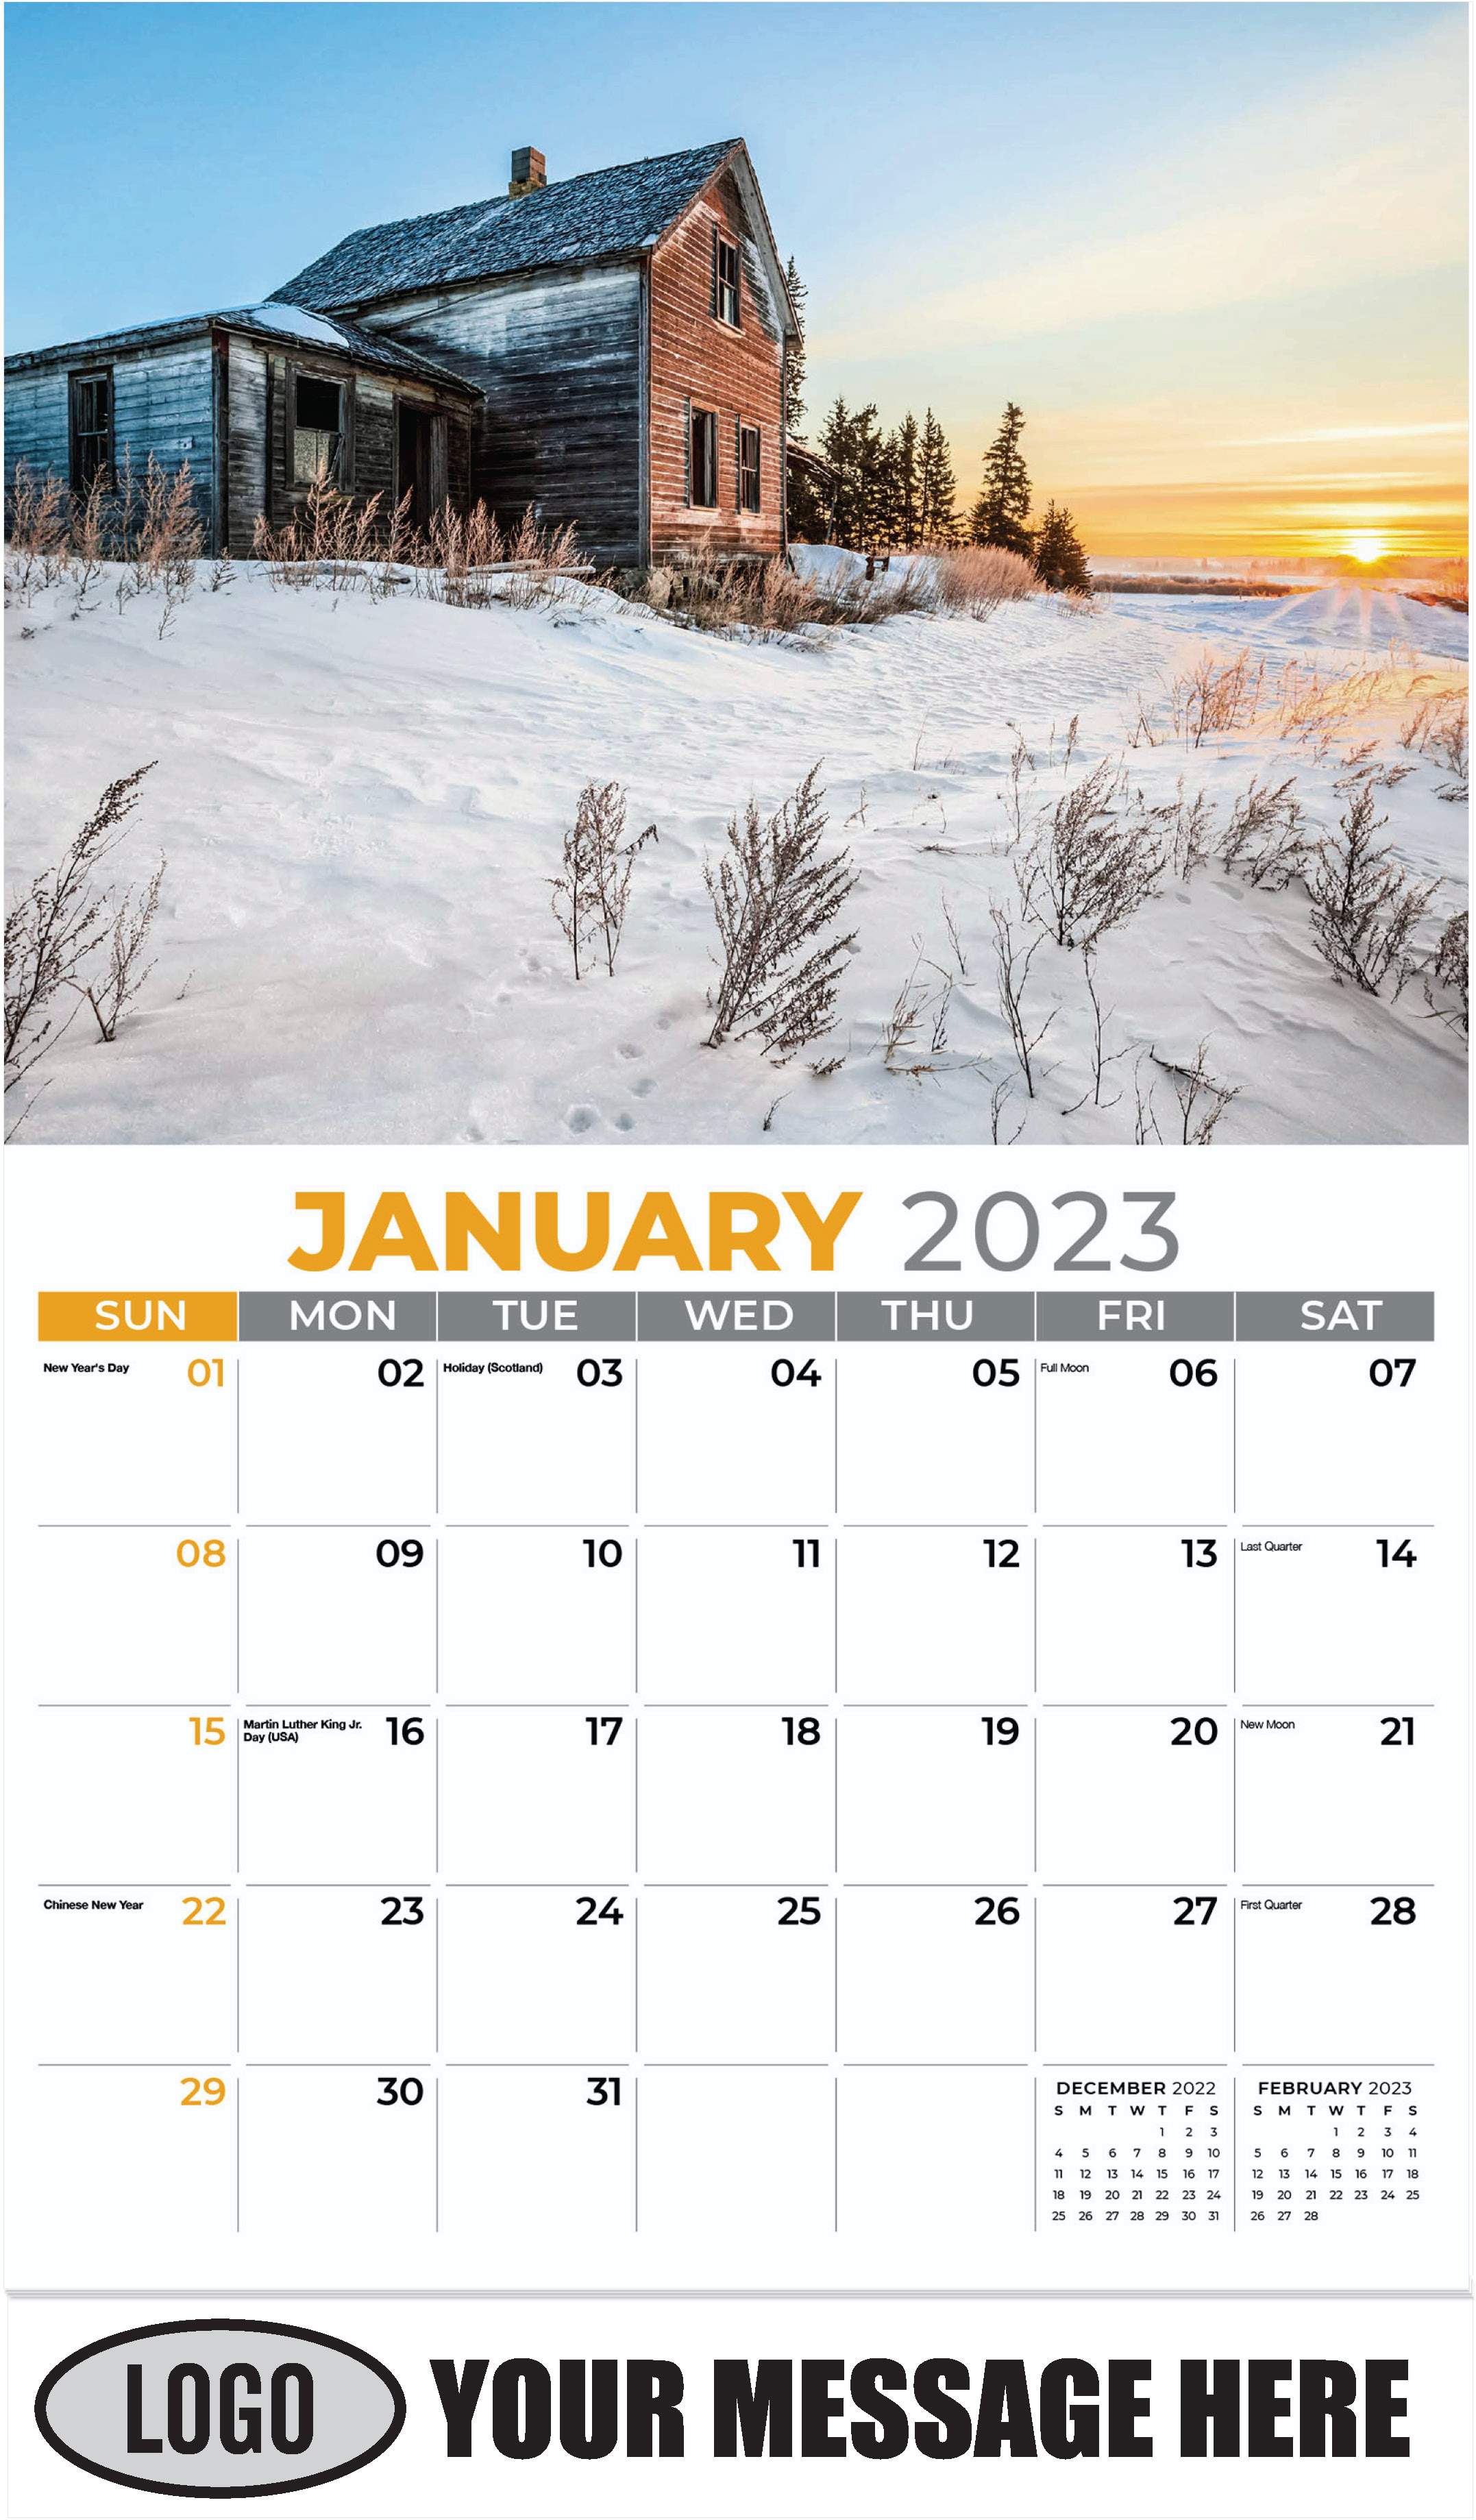 Winter Barn - January - Country Spirit 2023 Promotional Calendar